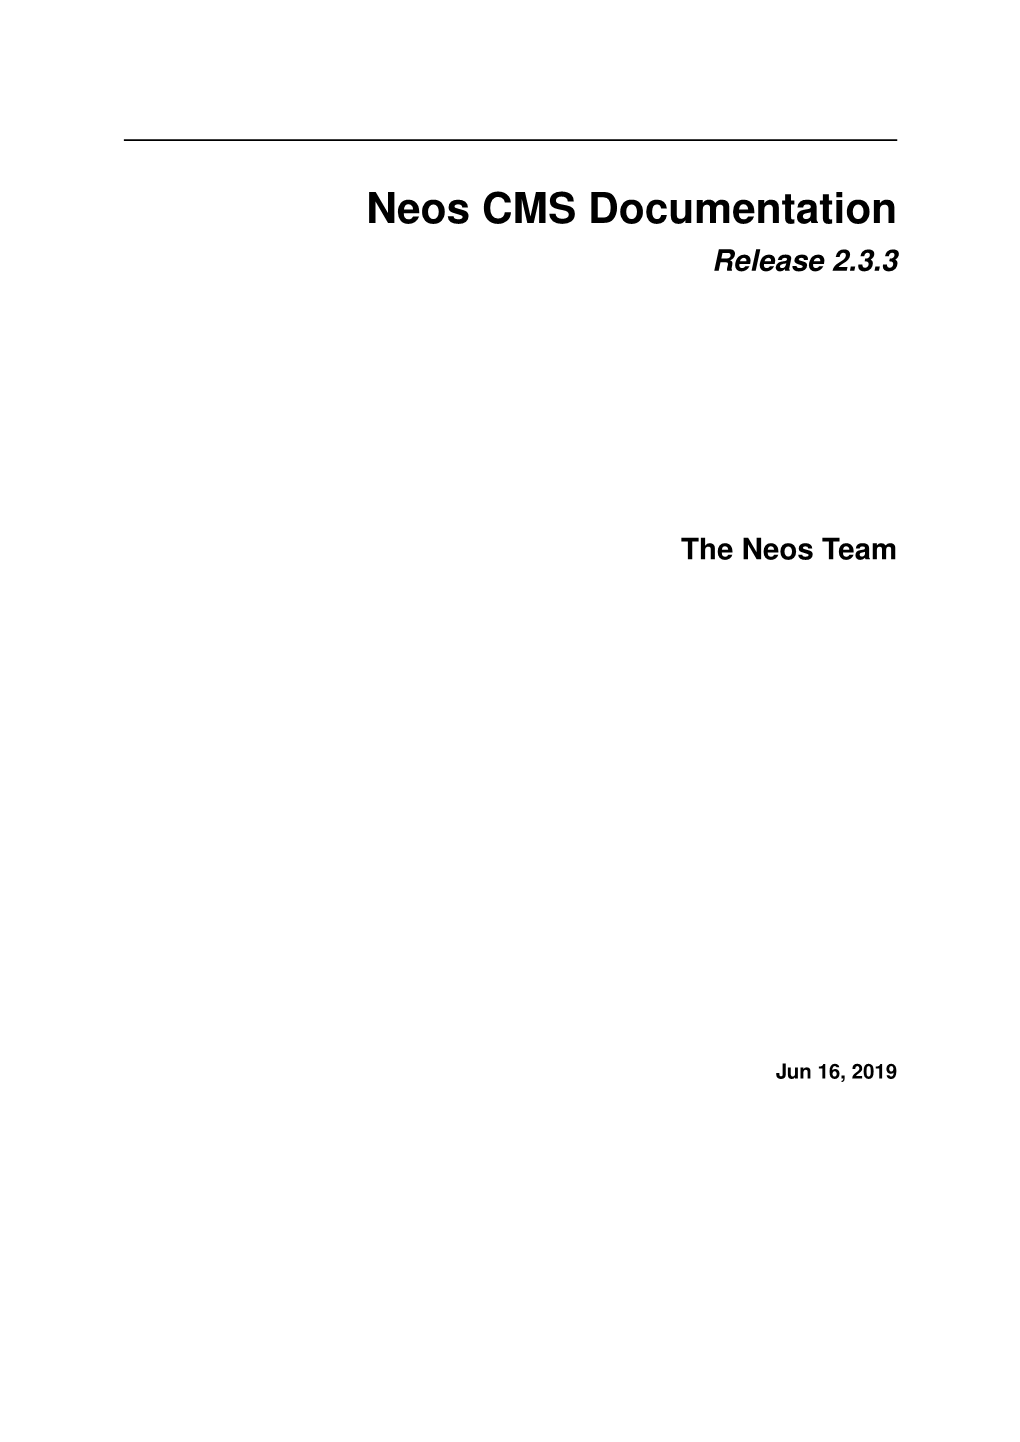 Neos CMS Documentation Release 2.3.3